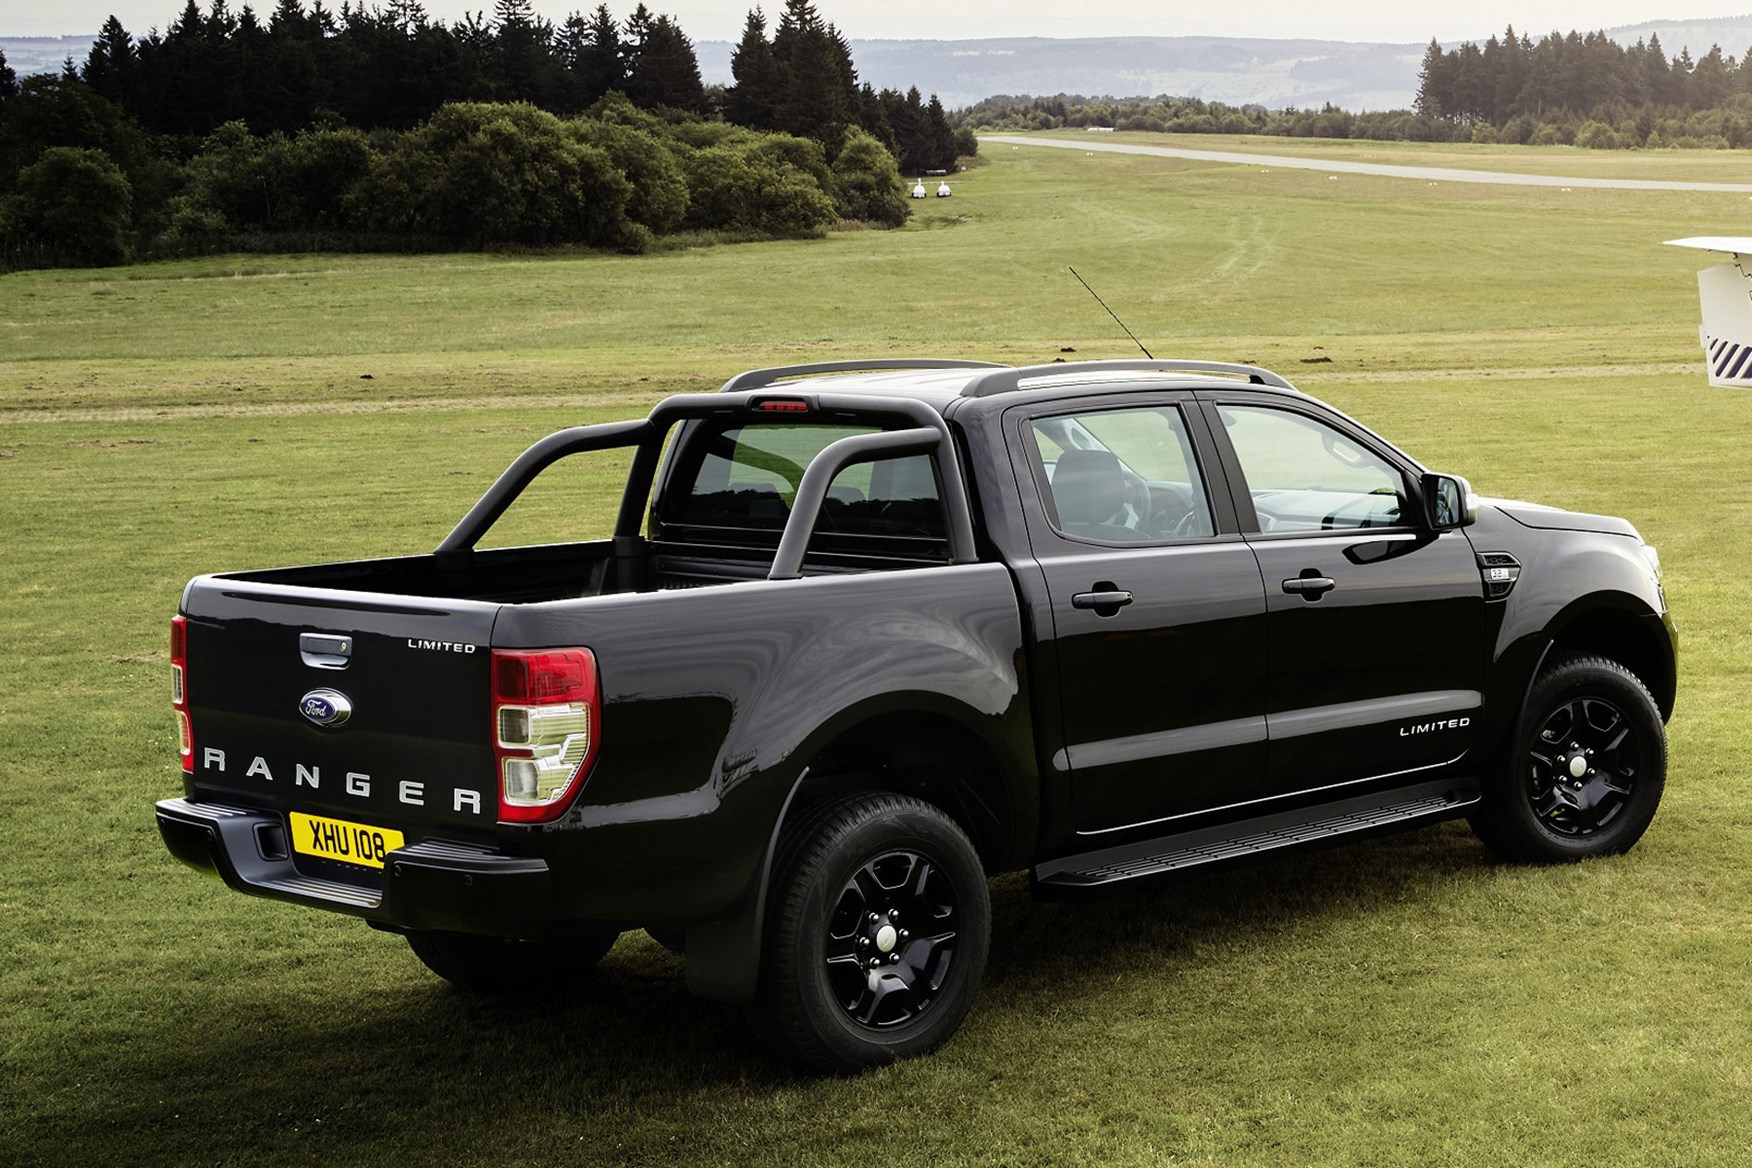 Ford Ranger Black Edition review - verdict